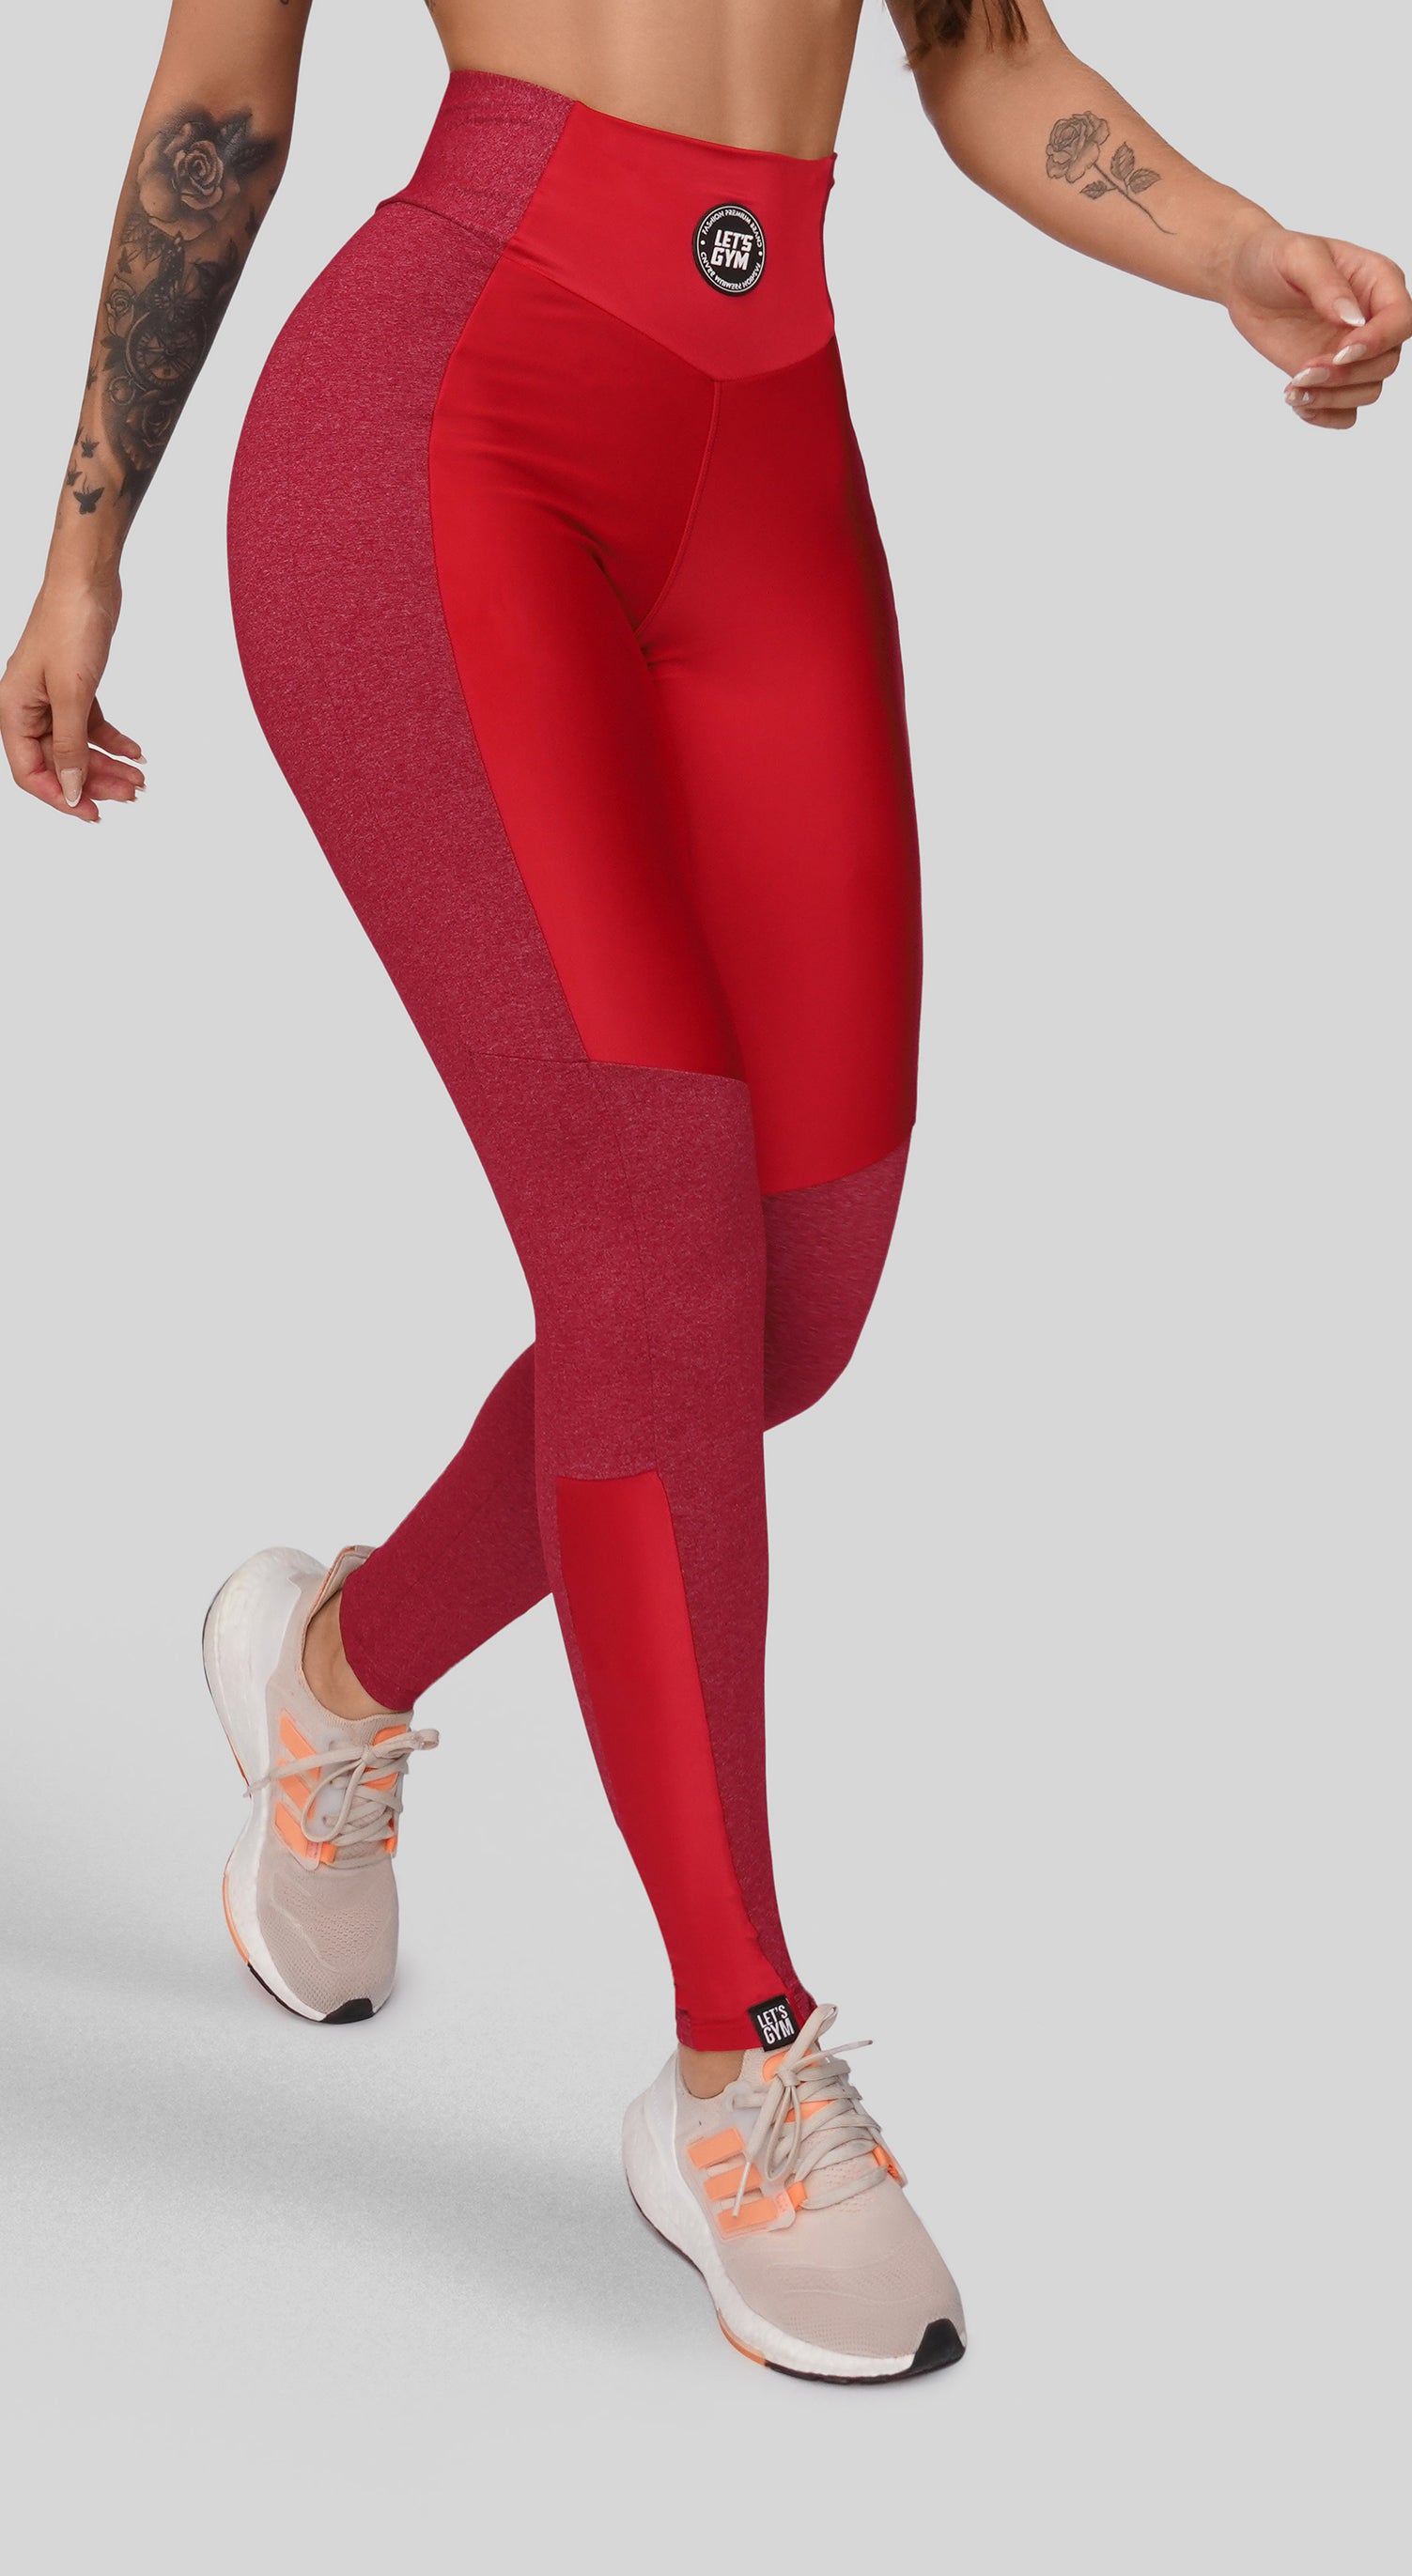 Gymshark red gym leggings - Gem